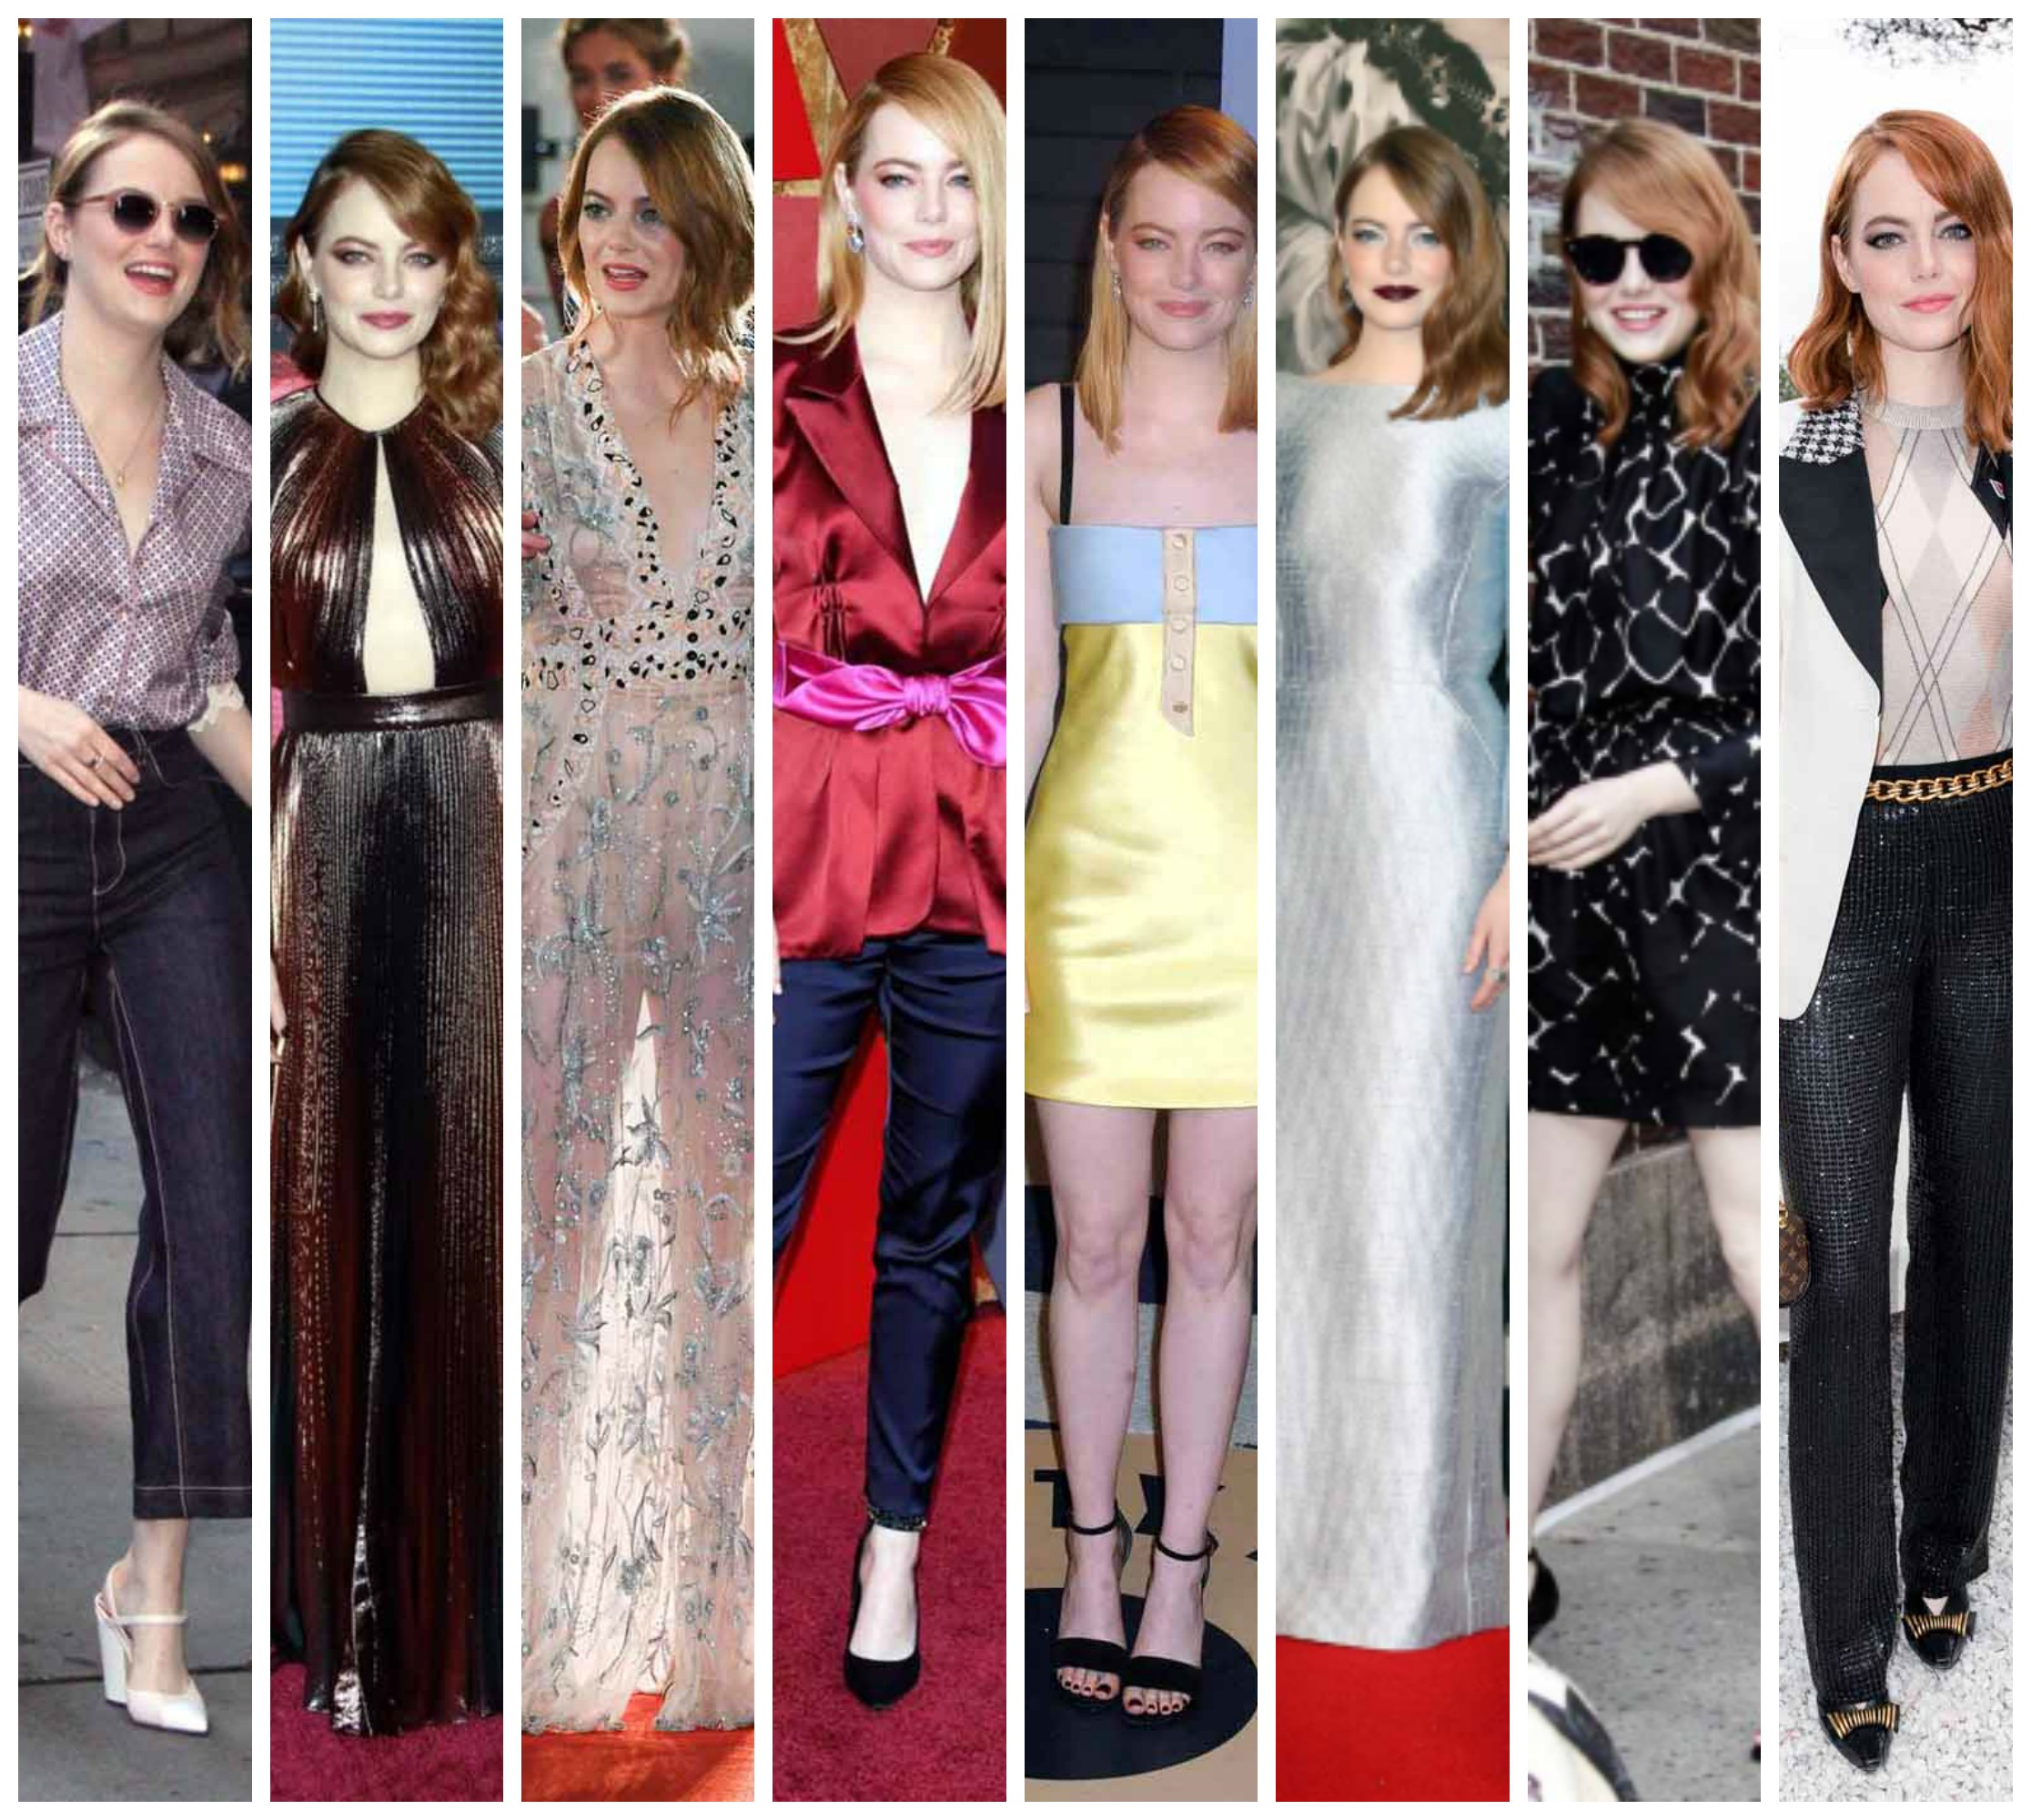 Actress Emma Stone is Louis Vuitton's newest ambassador